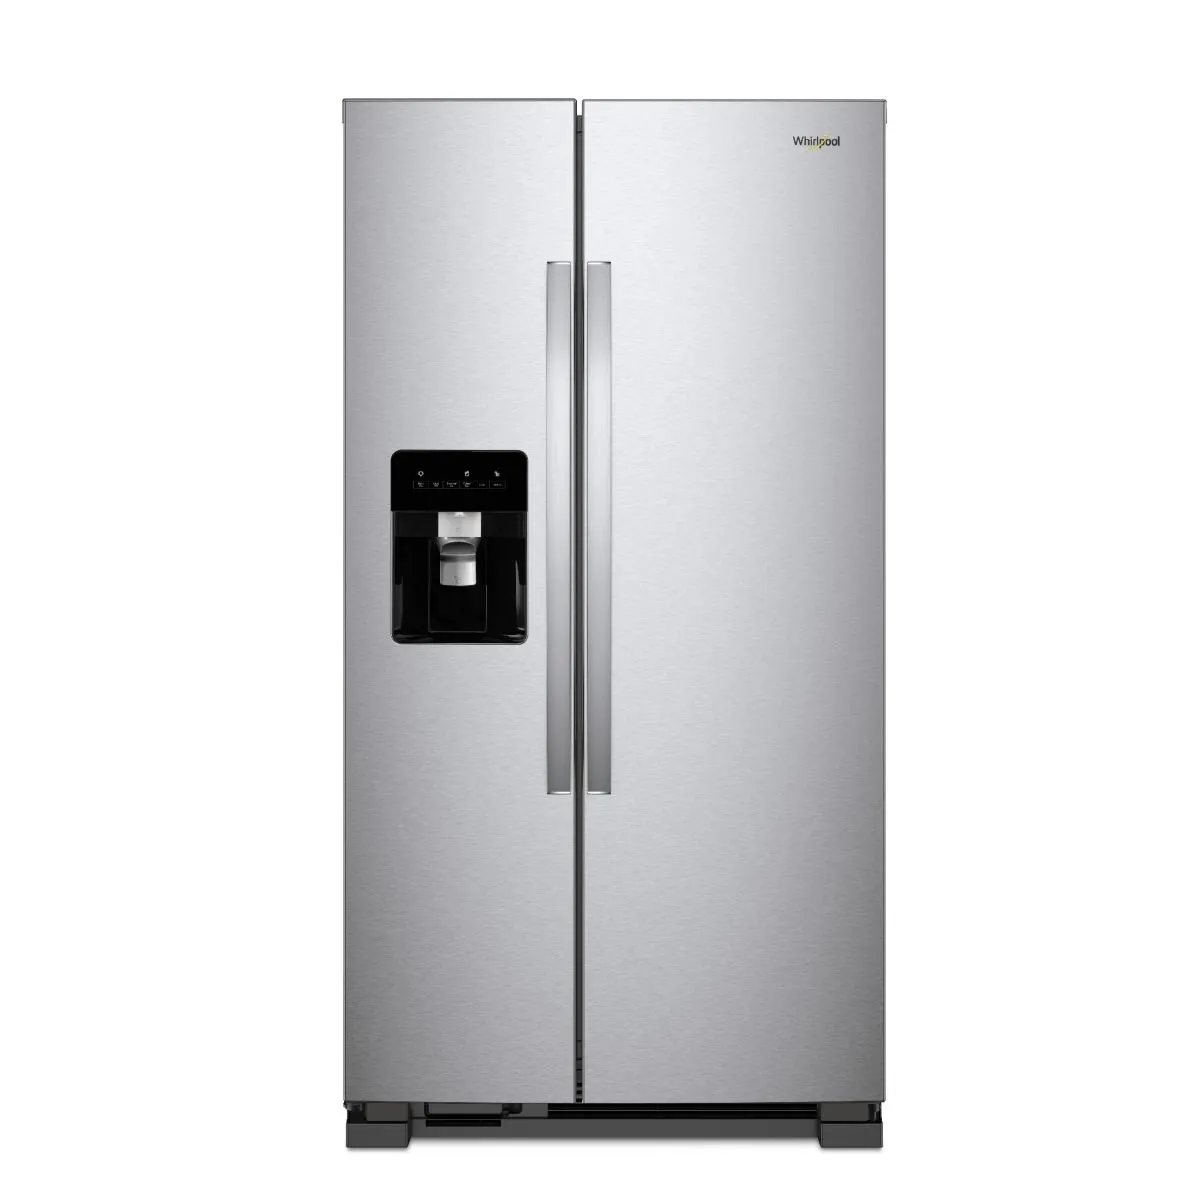 Refrigerador Whirlpool de 22 pies DUPLEX